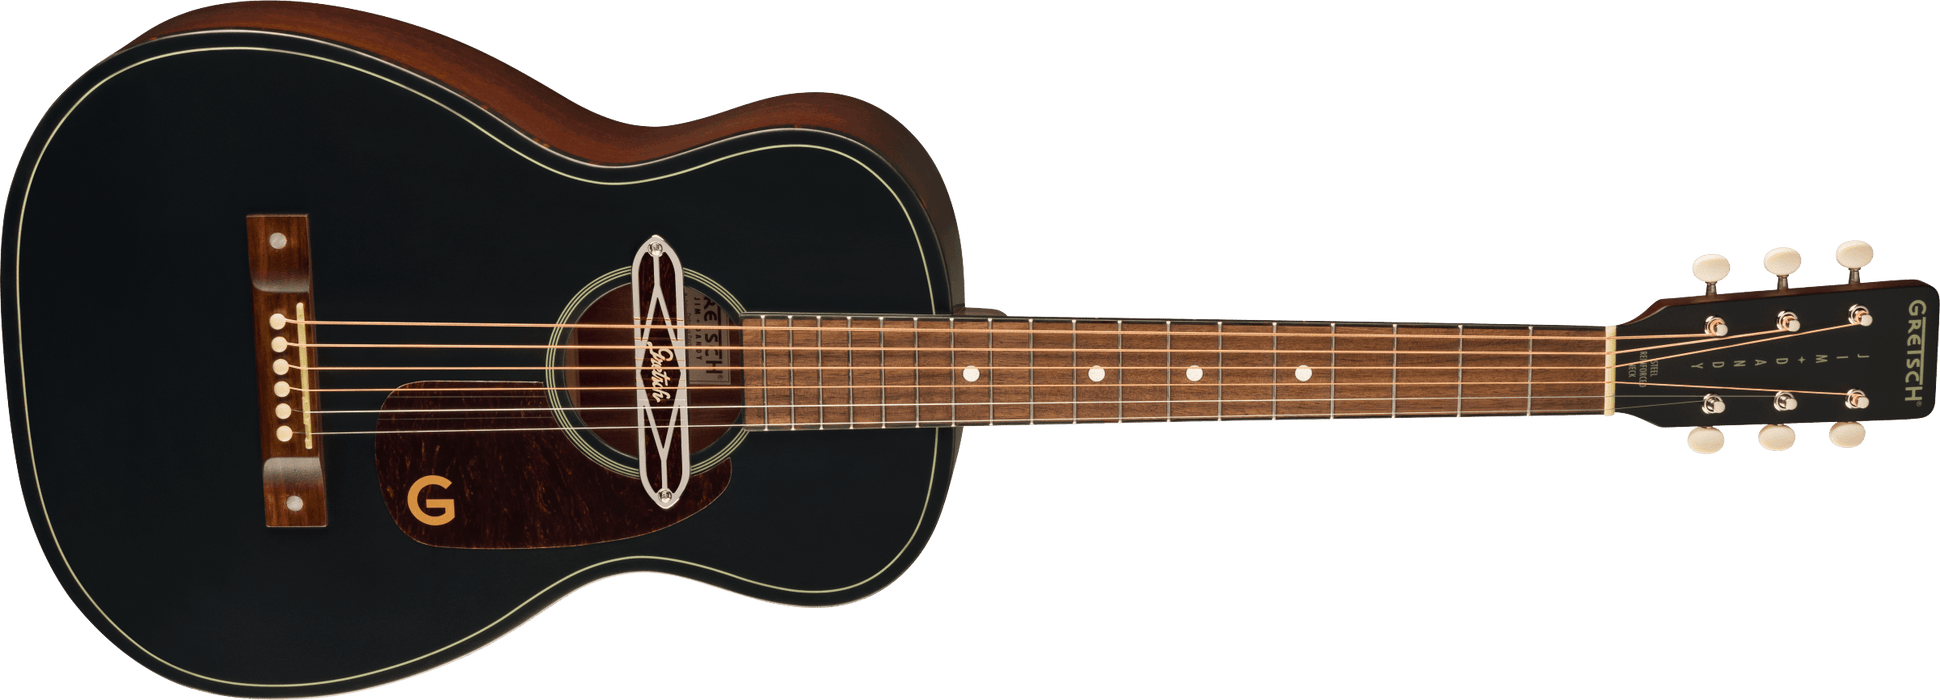 Gretsch Deltoluxe Parlor Electro Acoustic Guitar - Black Top